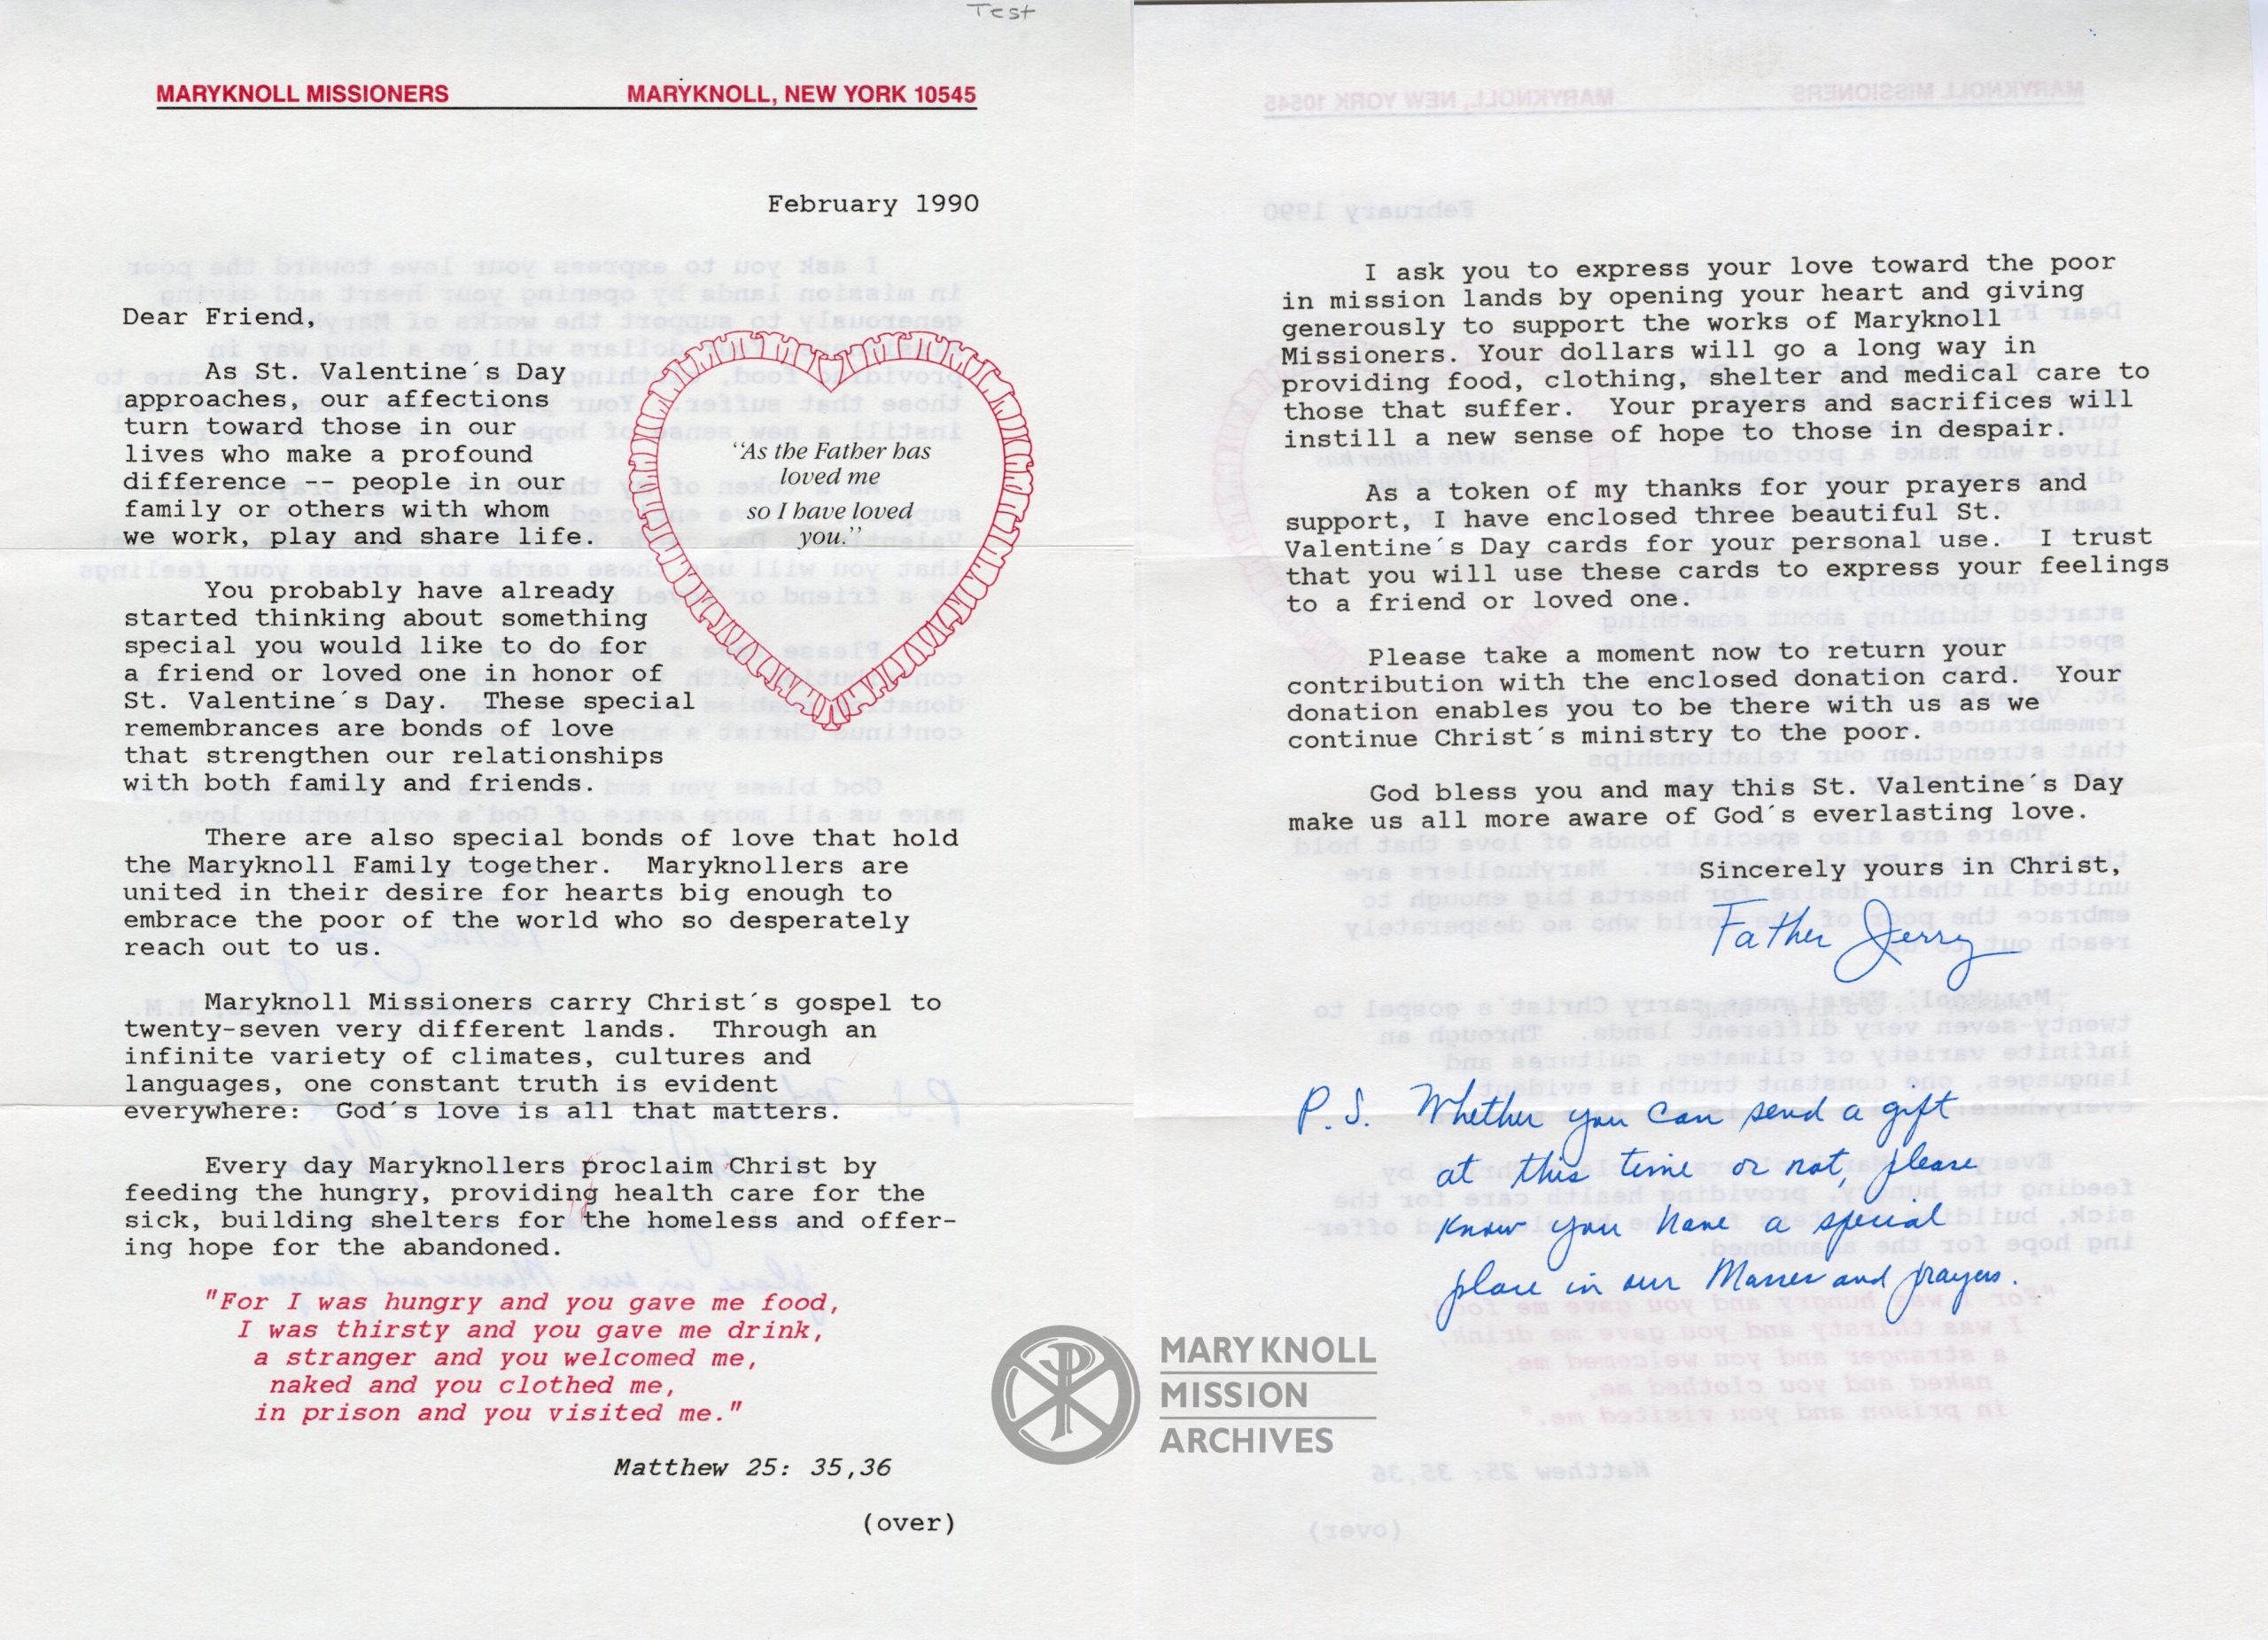 Valentine Appeal Letter, 1990